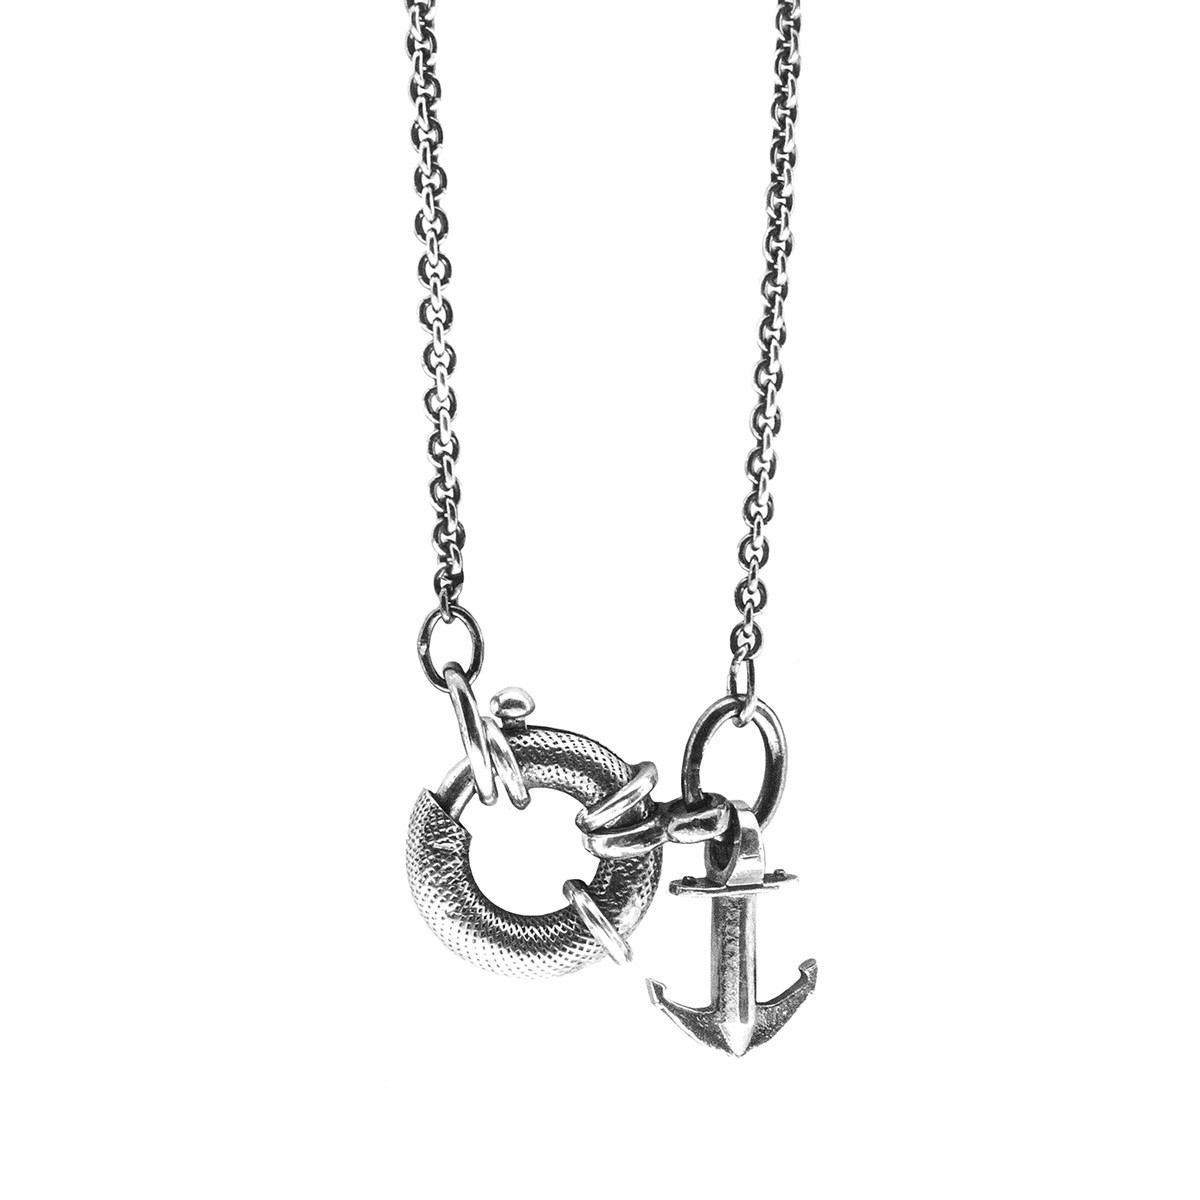 Clyde Anchor Signature Silver Necklace Pendant